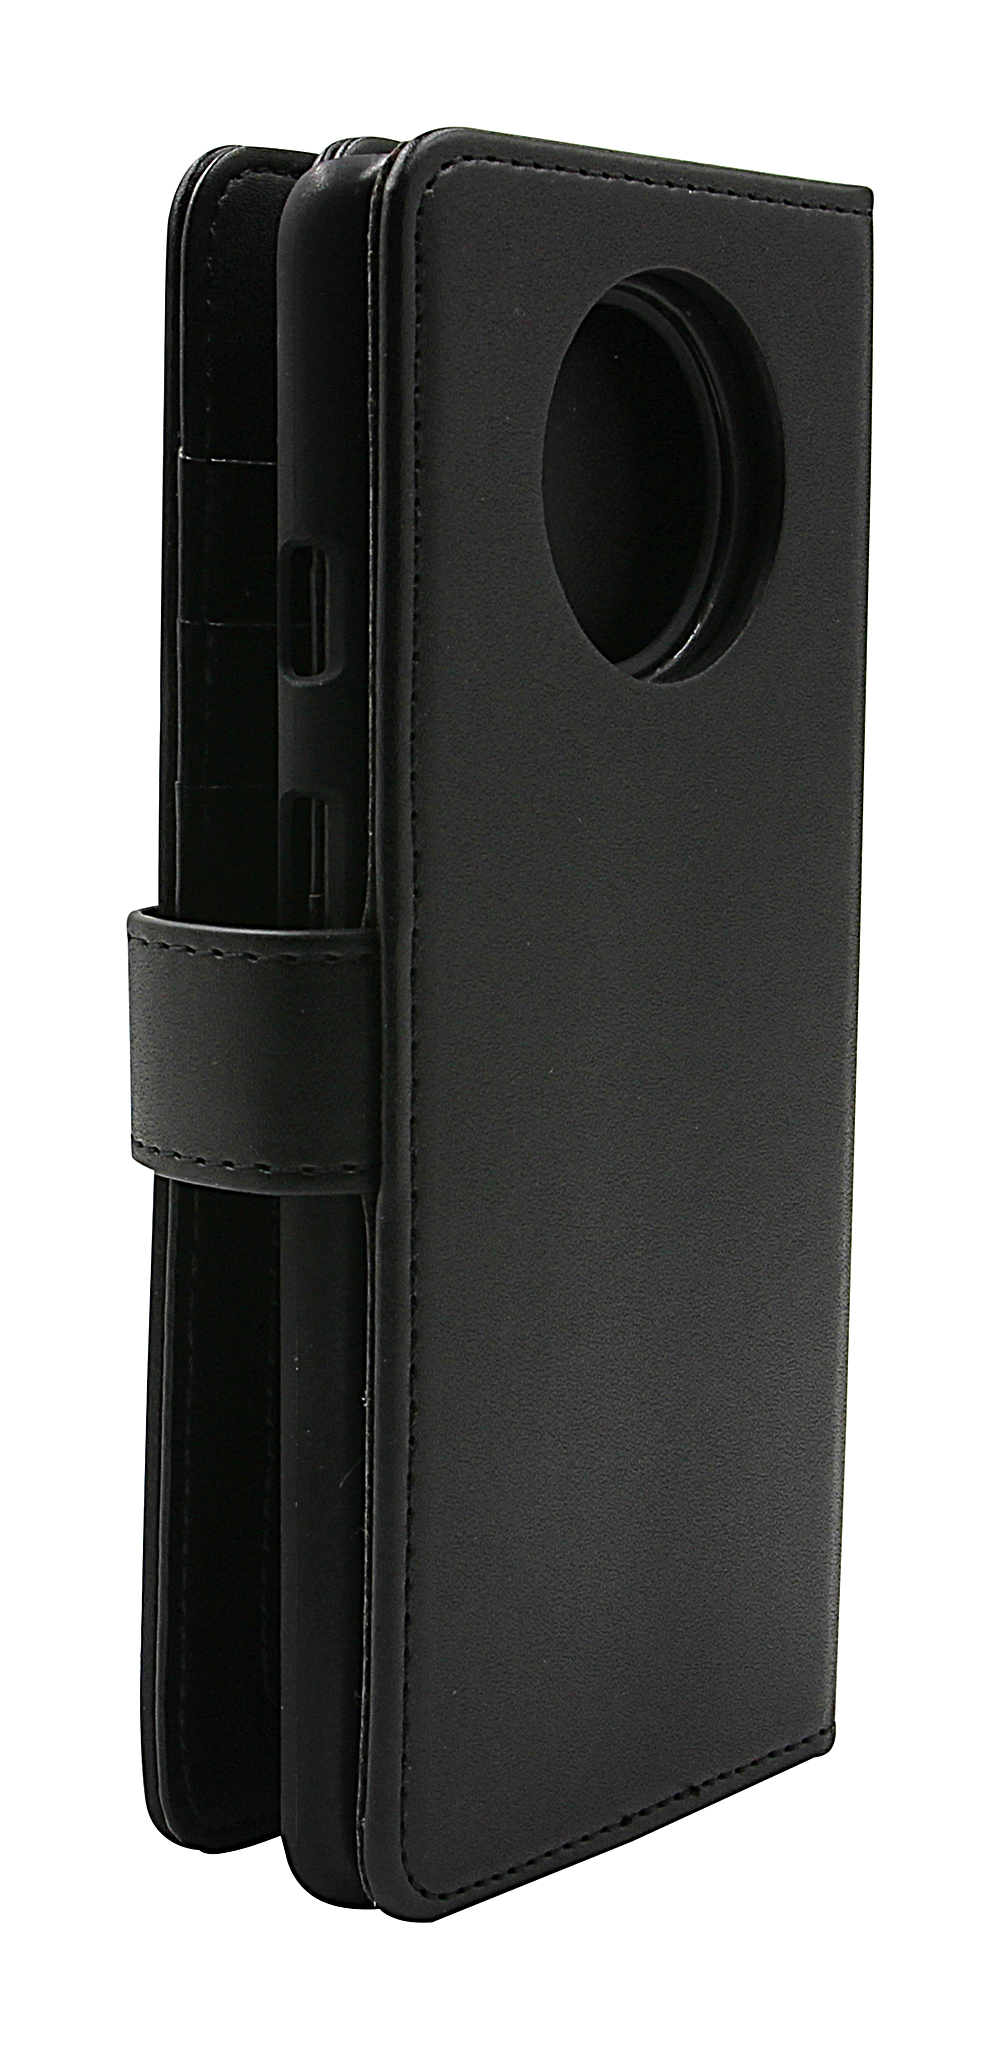 Skimblocker XL Magnet Wallet OnePlus 7T